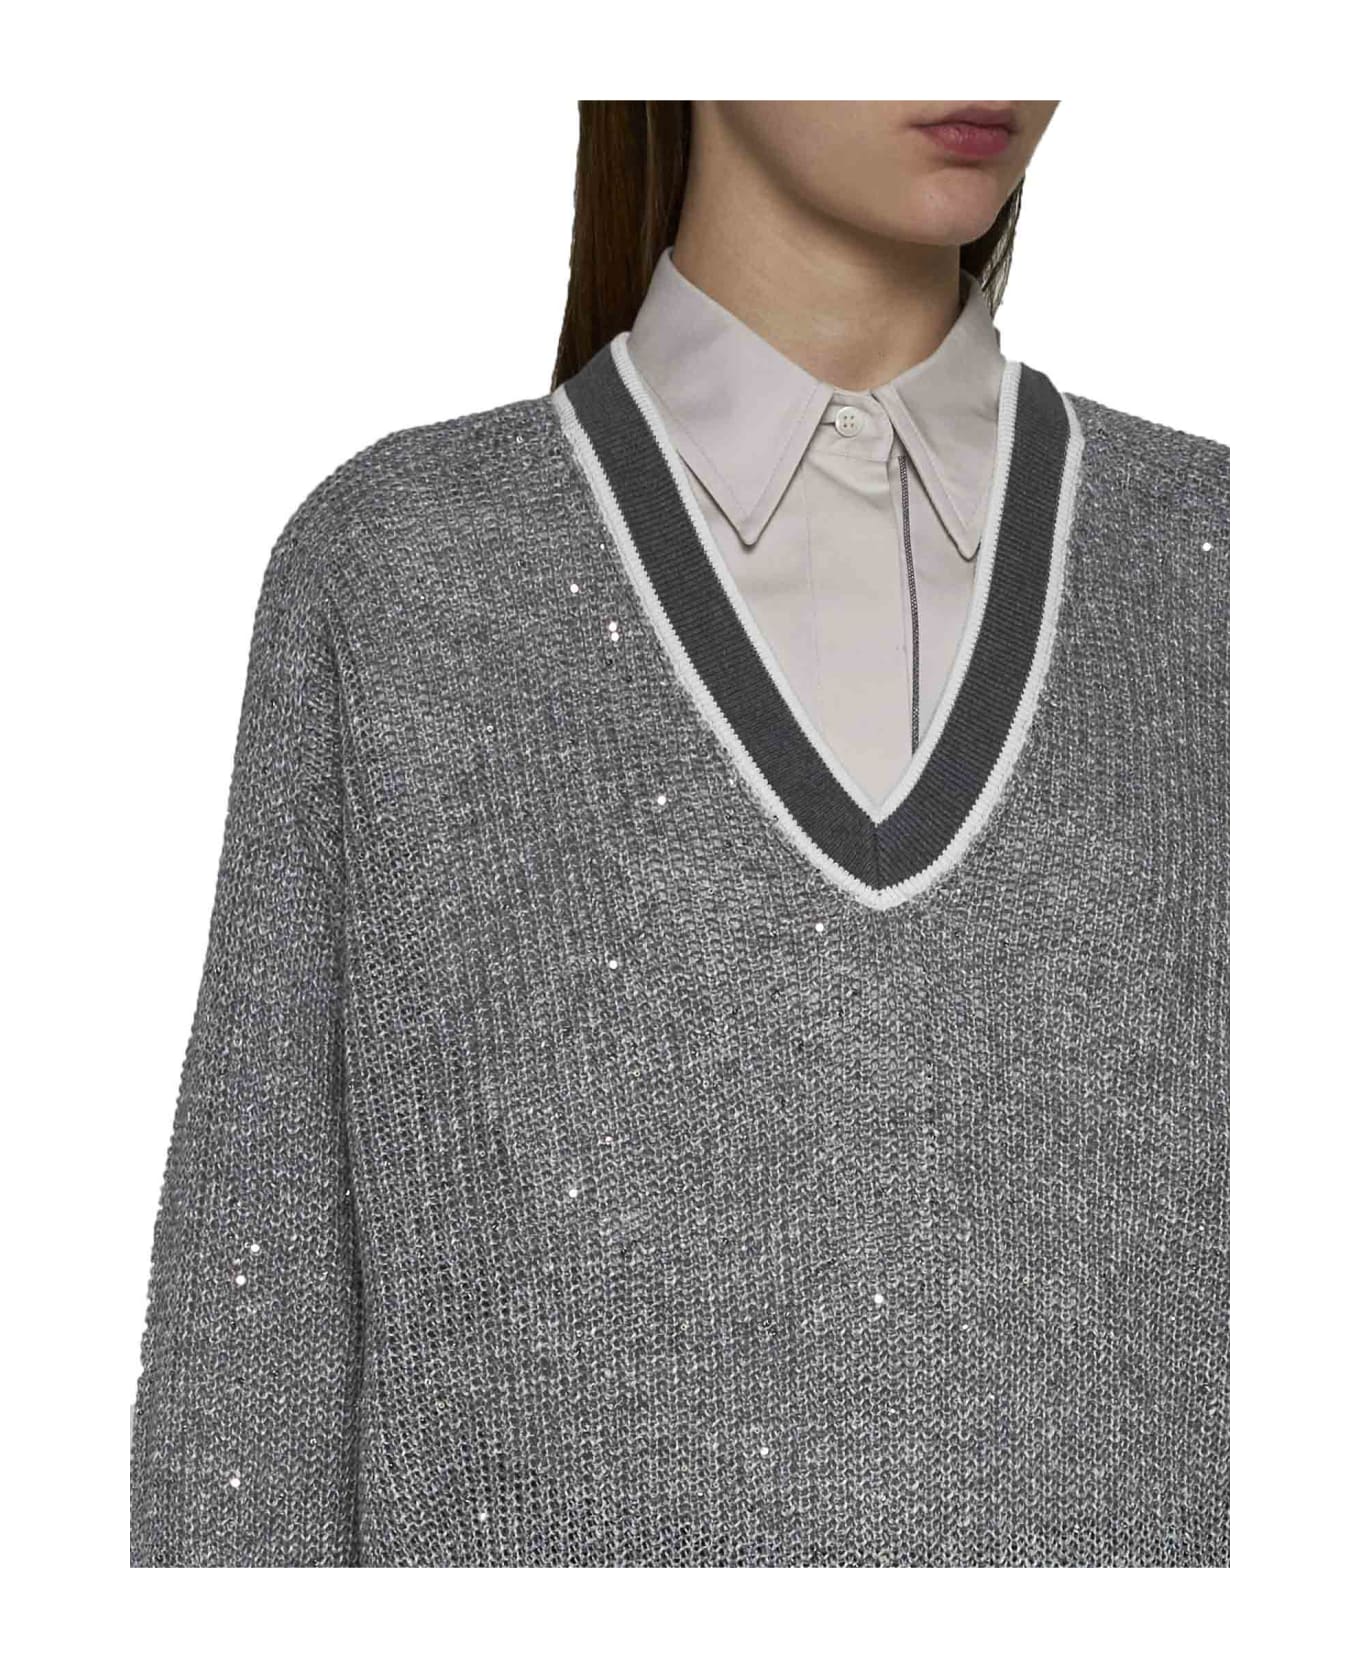 Brunello Cucinelli Linen Knit Sweater - Grey